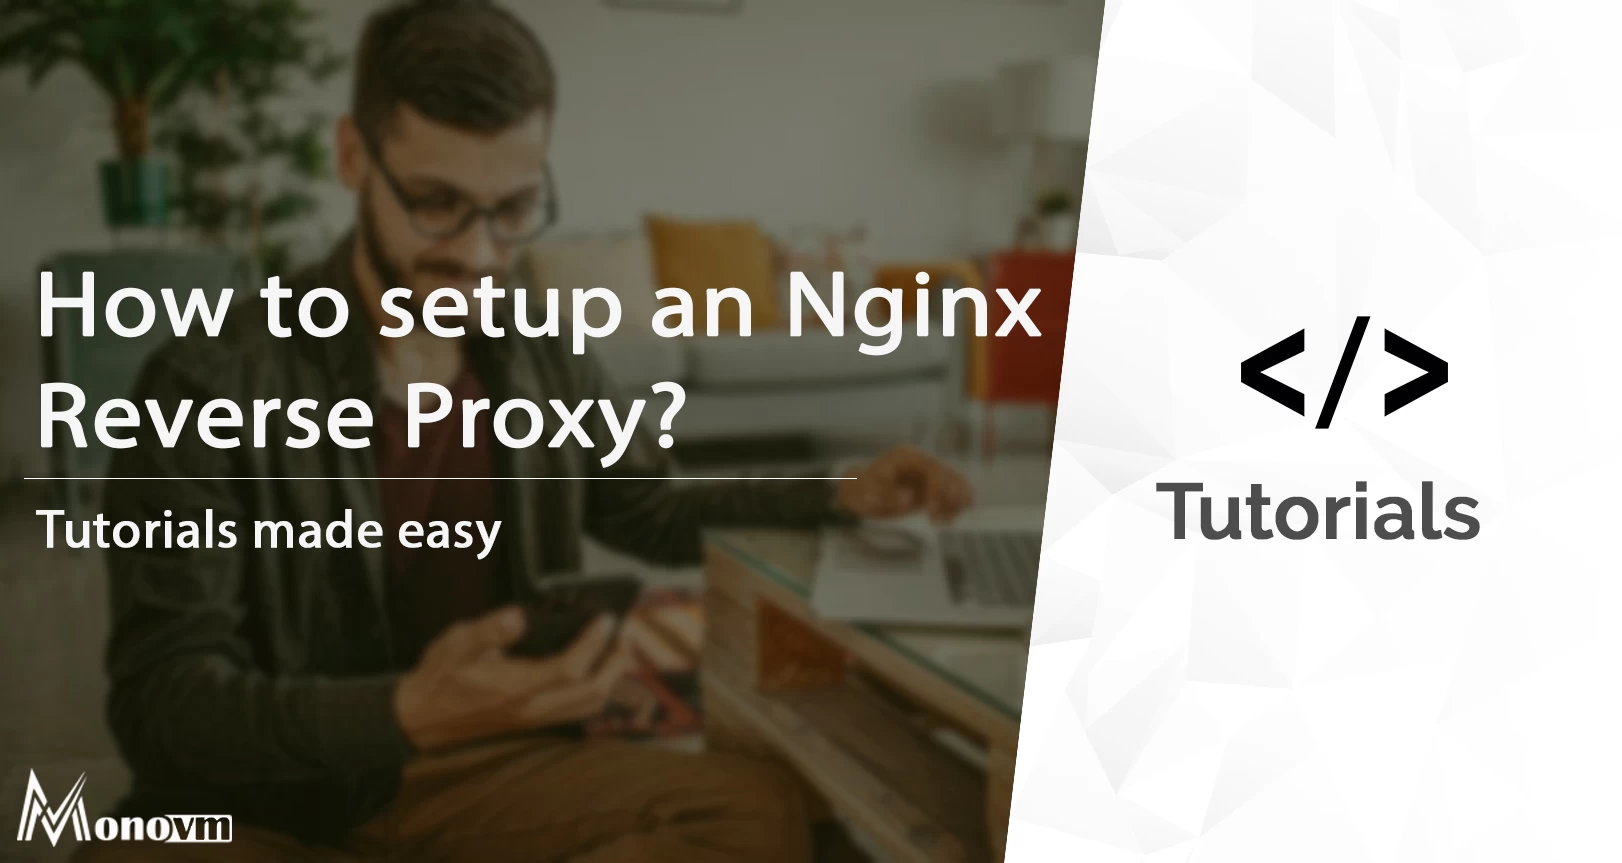 How to setup an Nginx Reverse Proxy